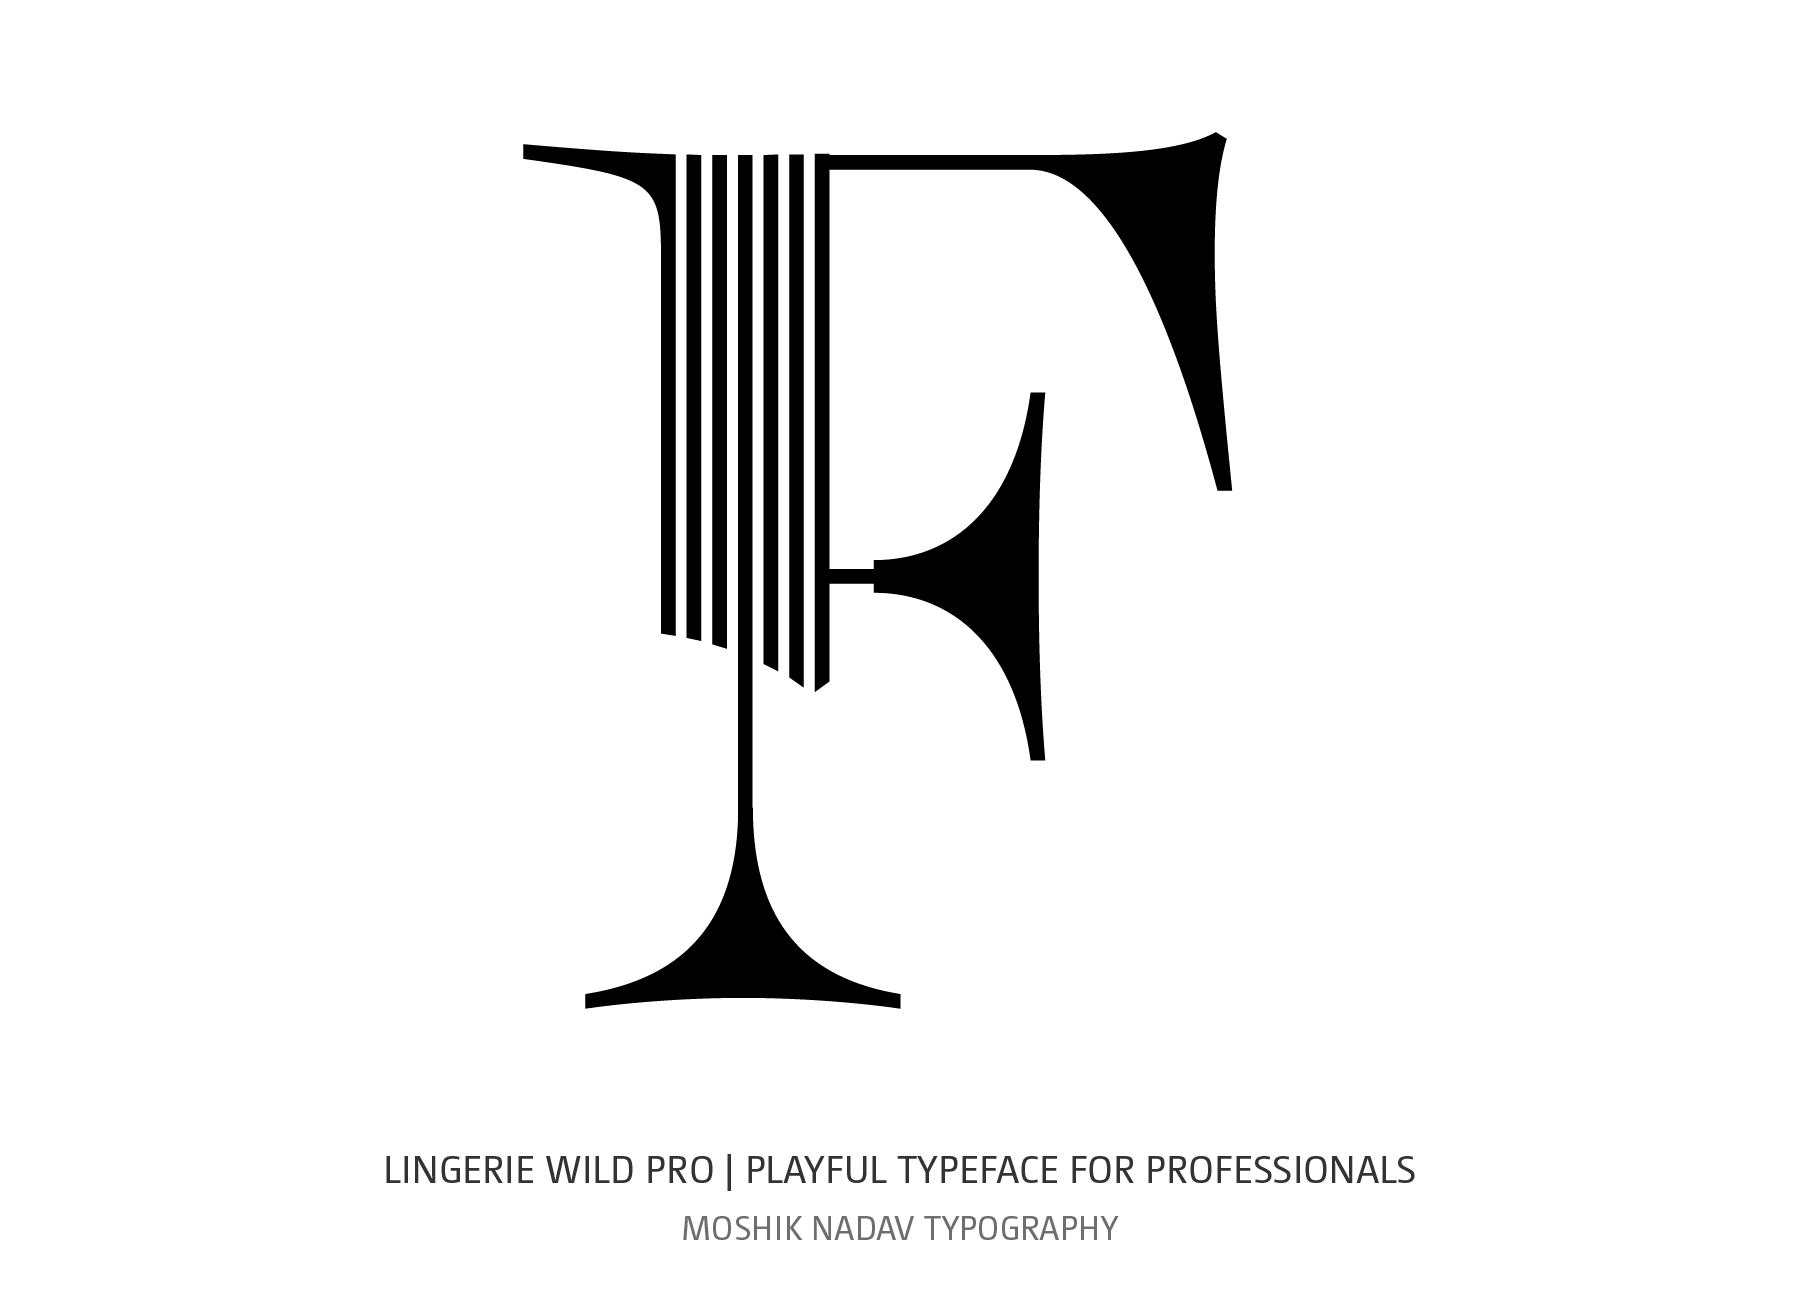 Lingerie Wild Pro Typeface designed by Moshik Nadav Typography NYC